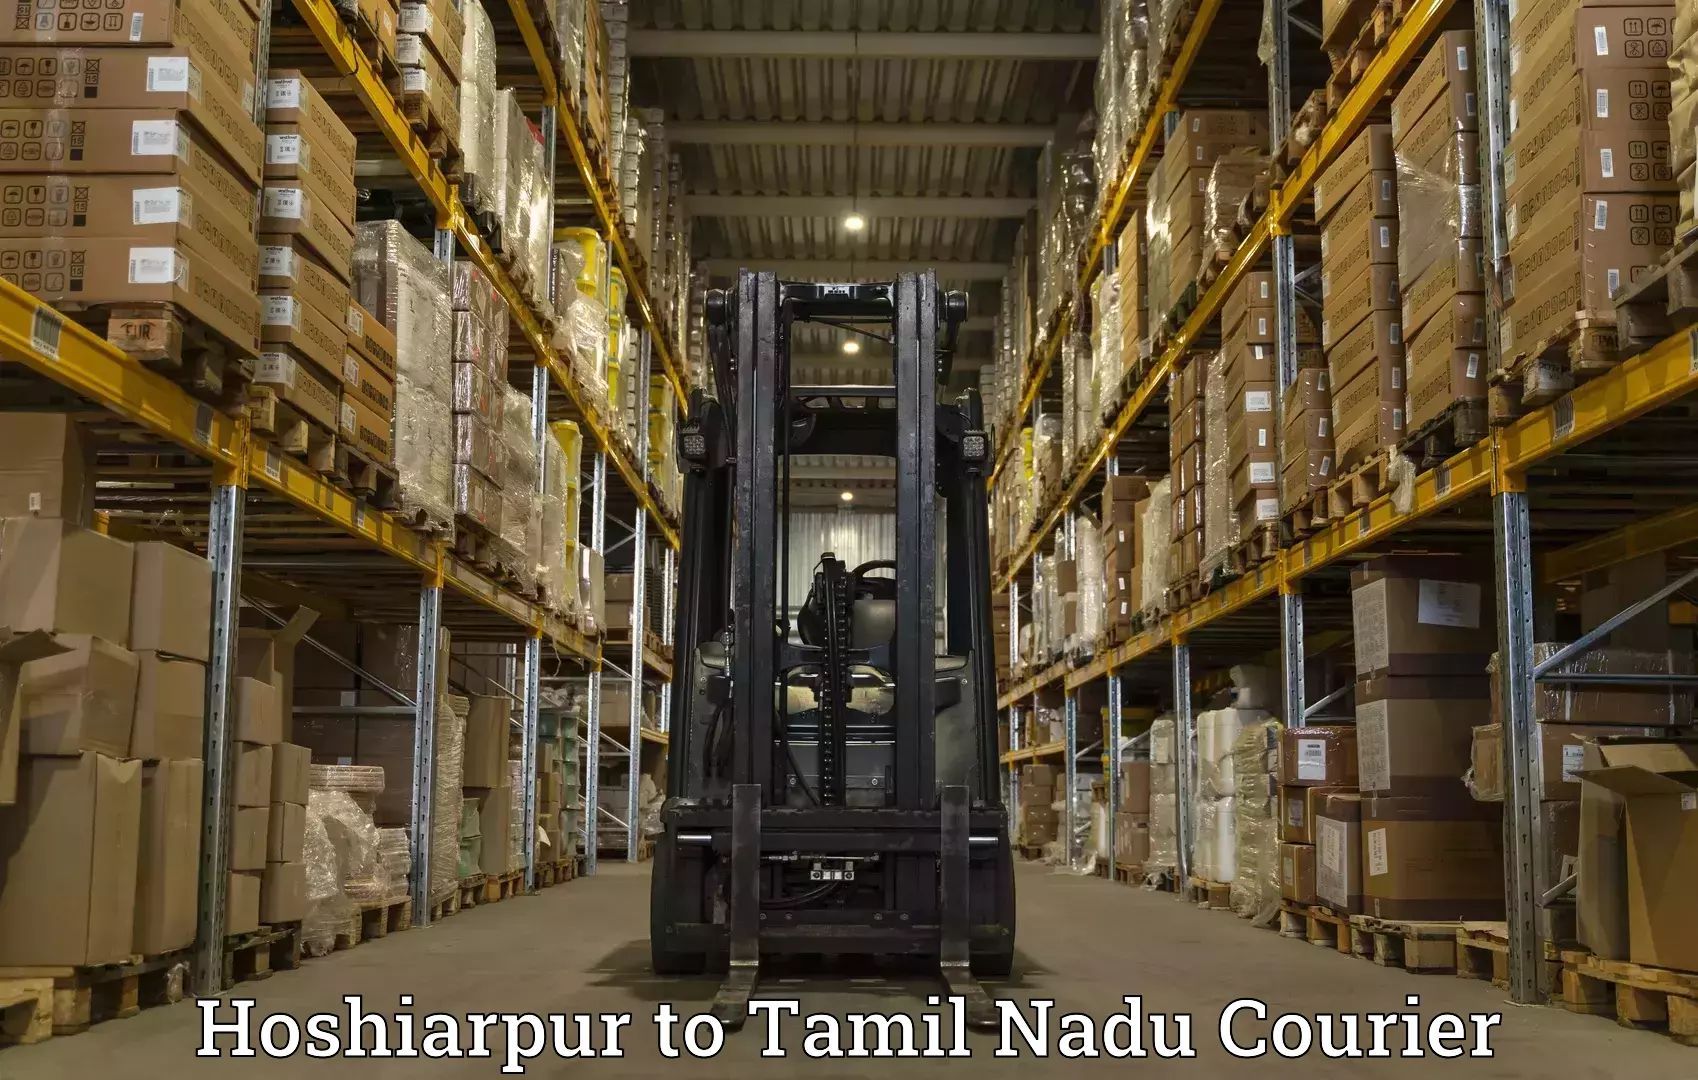 24-hour courier service Hoshiarpur to Chennai Port